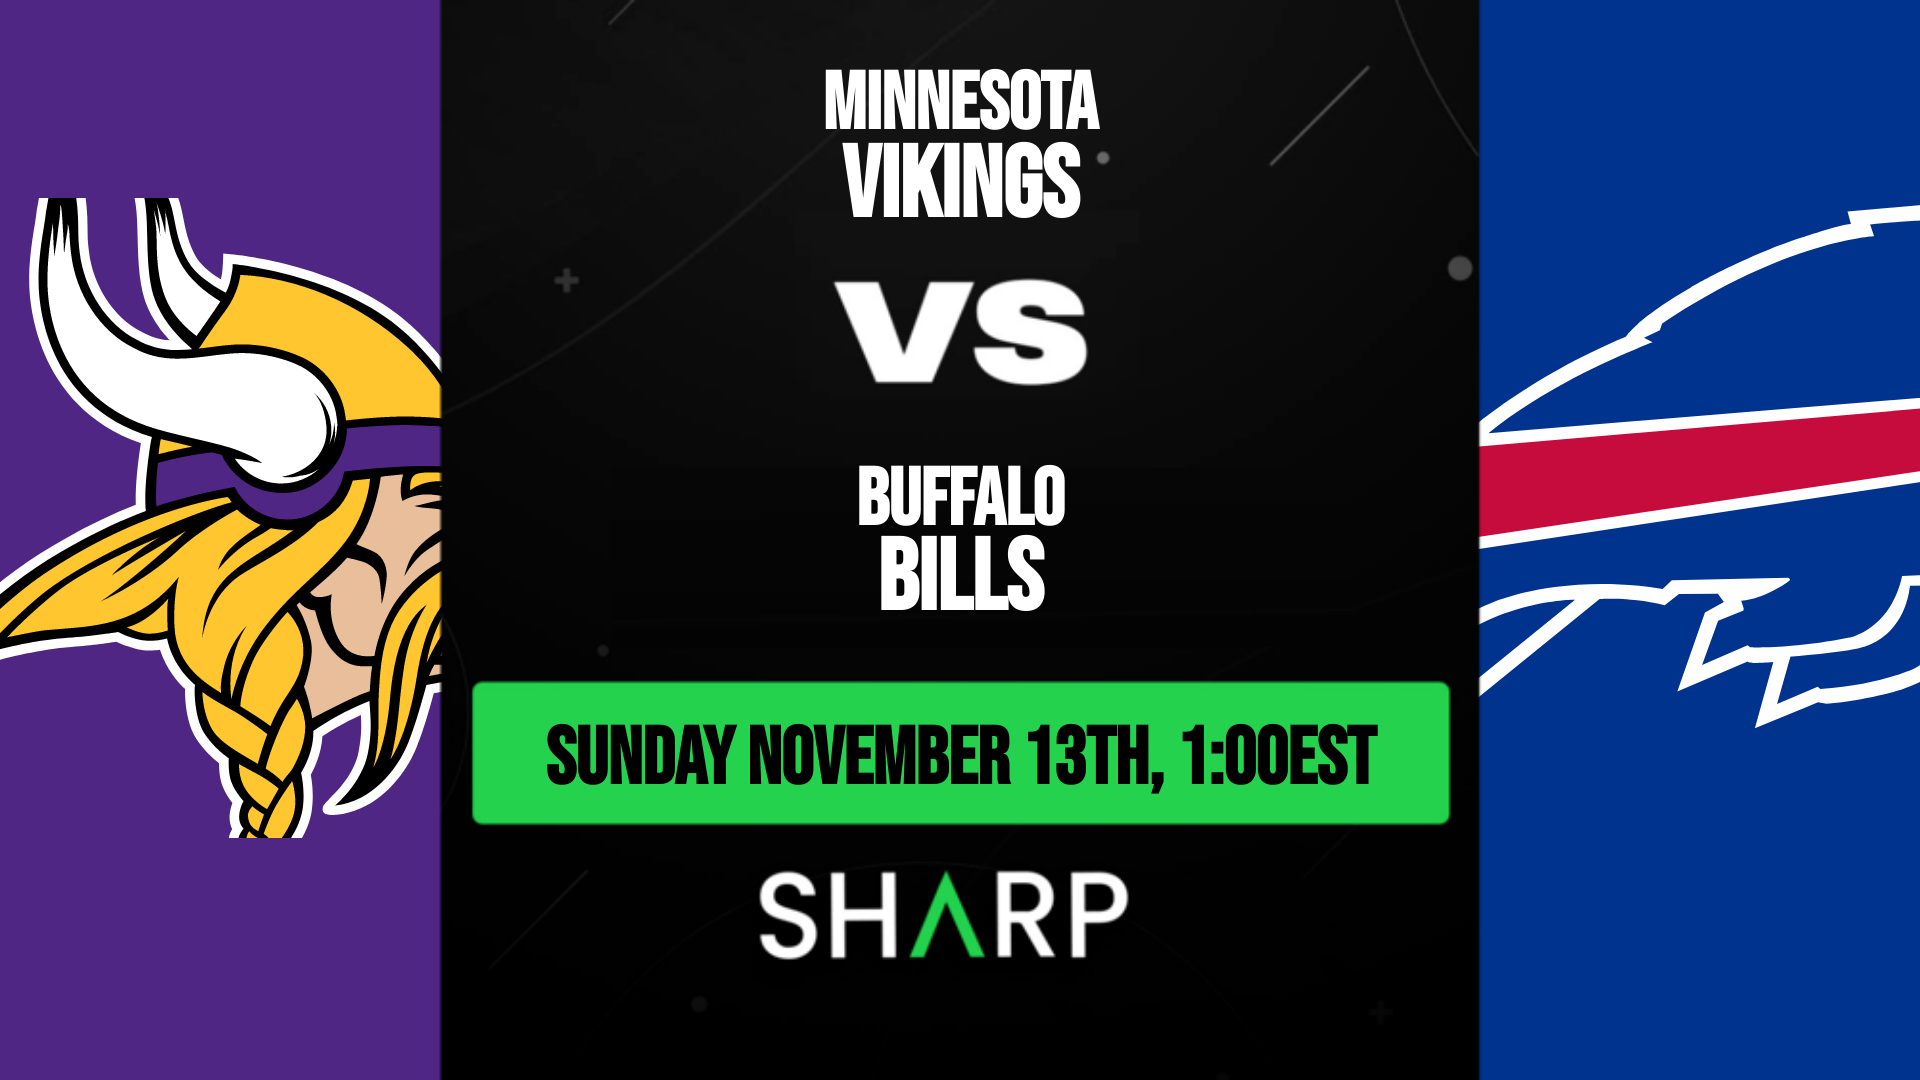 Minnesota Vikings vs Buffalo Bills Matchup Preview - November 13th